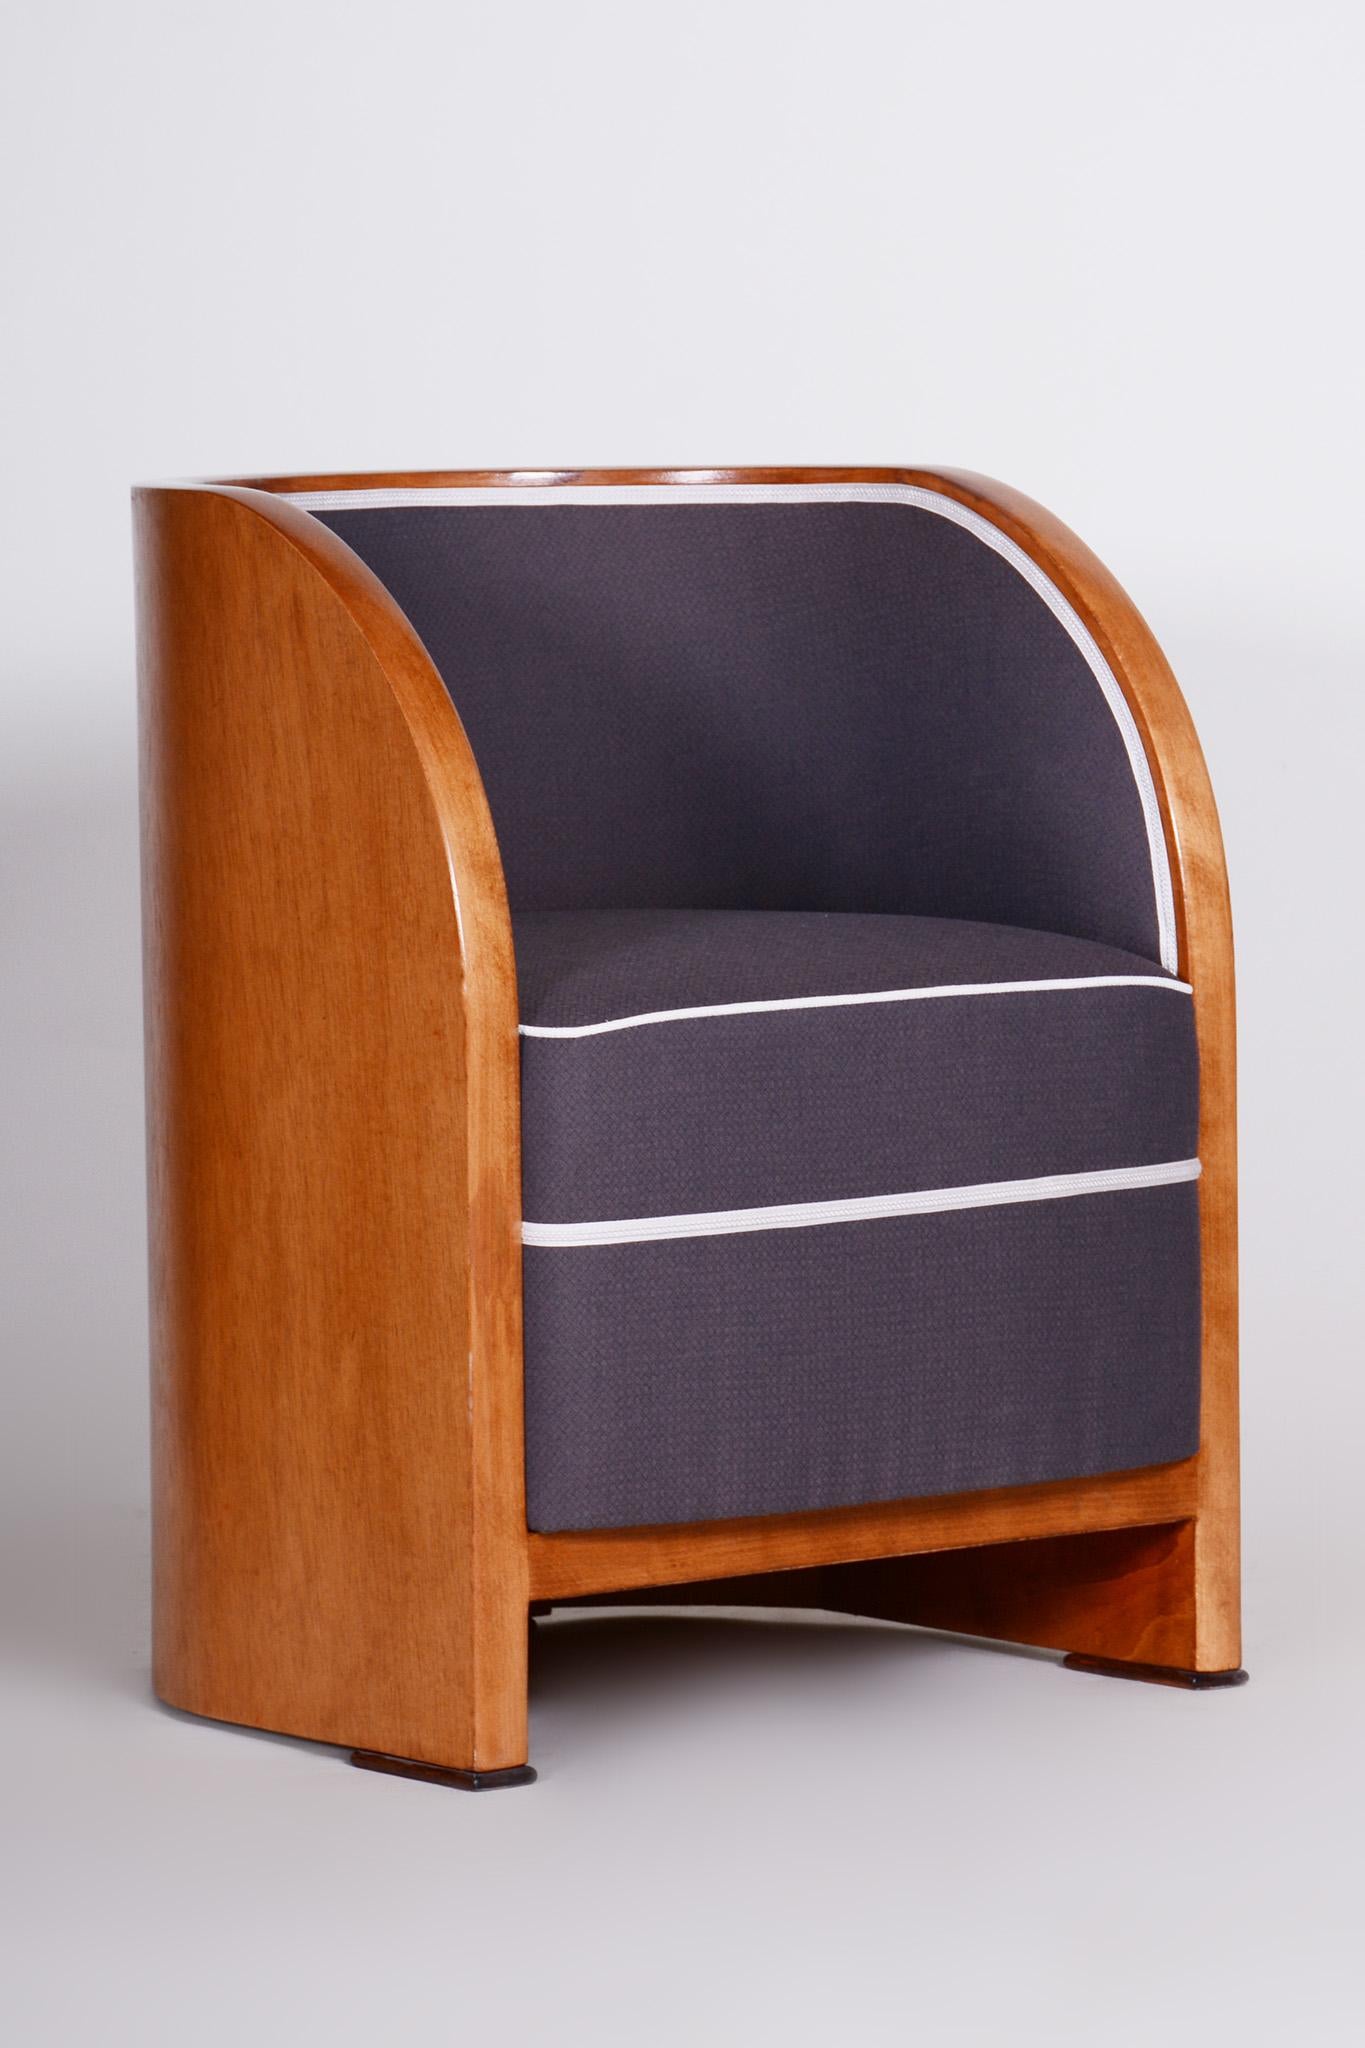 Restored Art Deco Armchair, Mahogany Veneer, Beech Solid Wood, France, 1940s In Good Condition For Sale In Horomerice, CZ